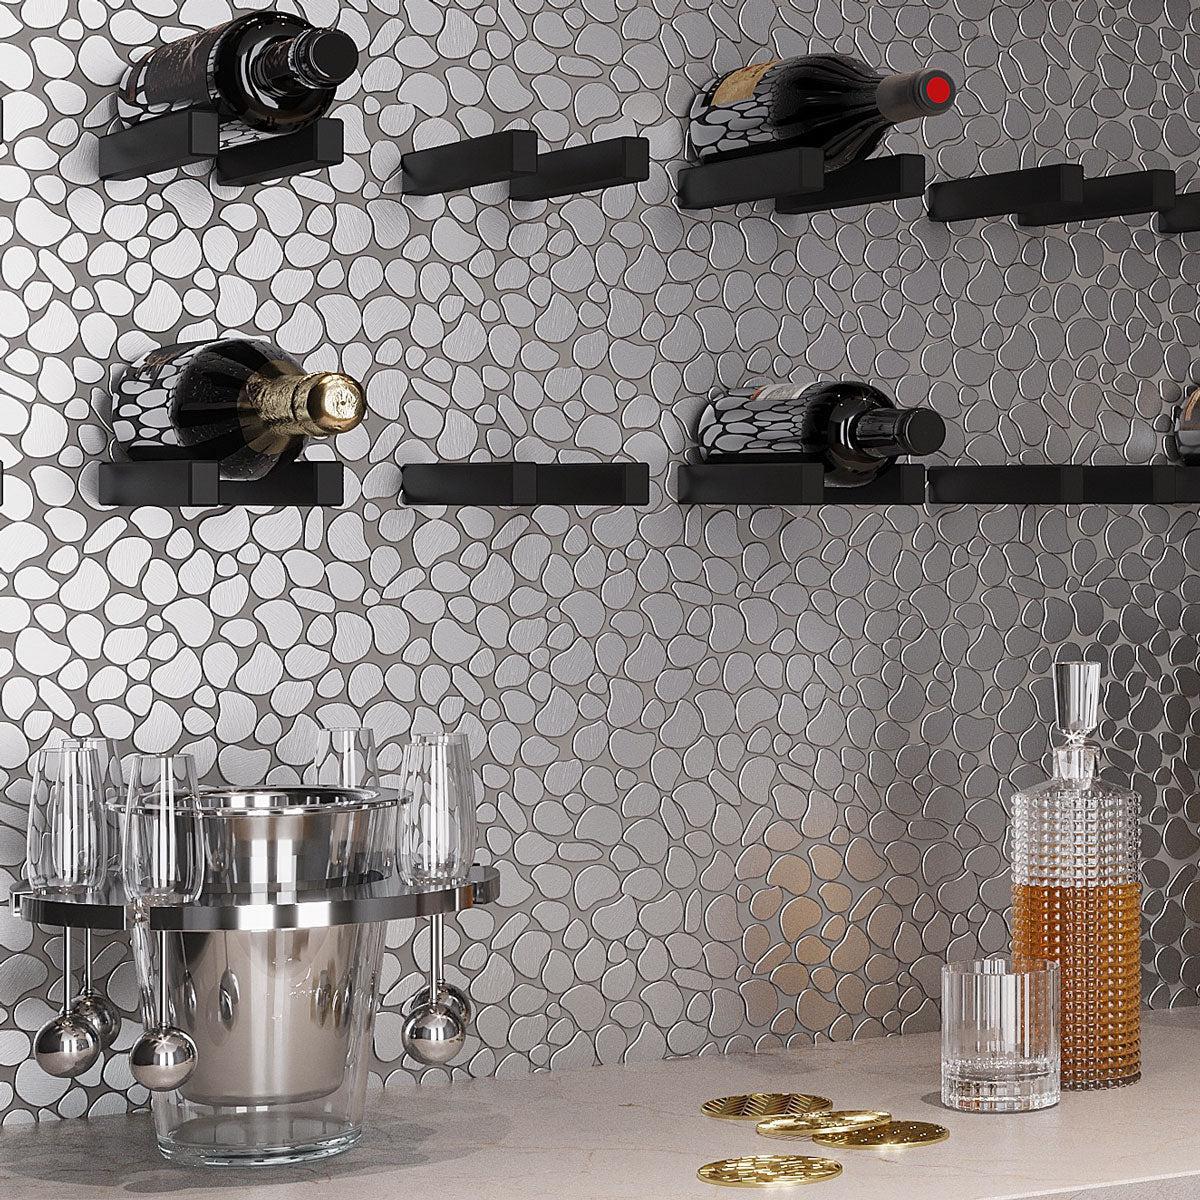 Stainless Steel Pebble Metal Mosaic Tile wine bar backsplash